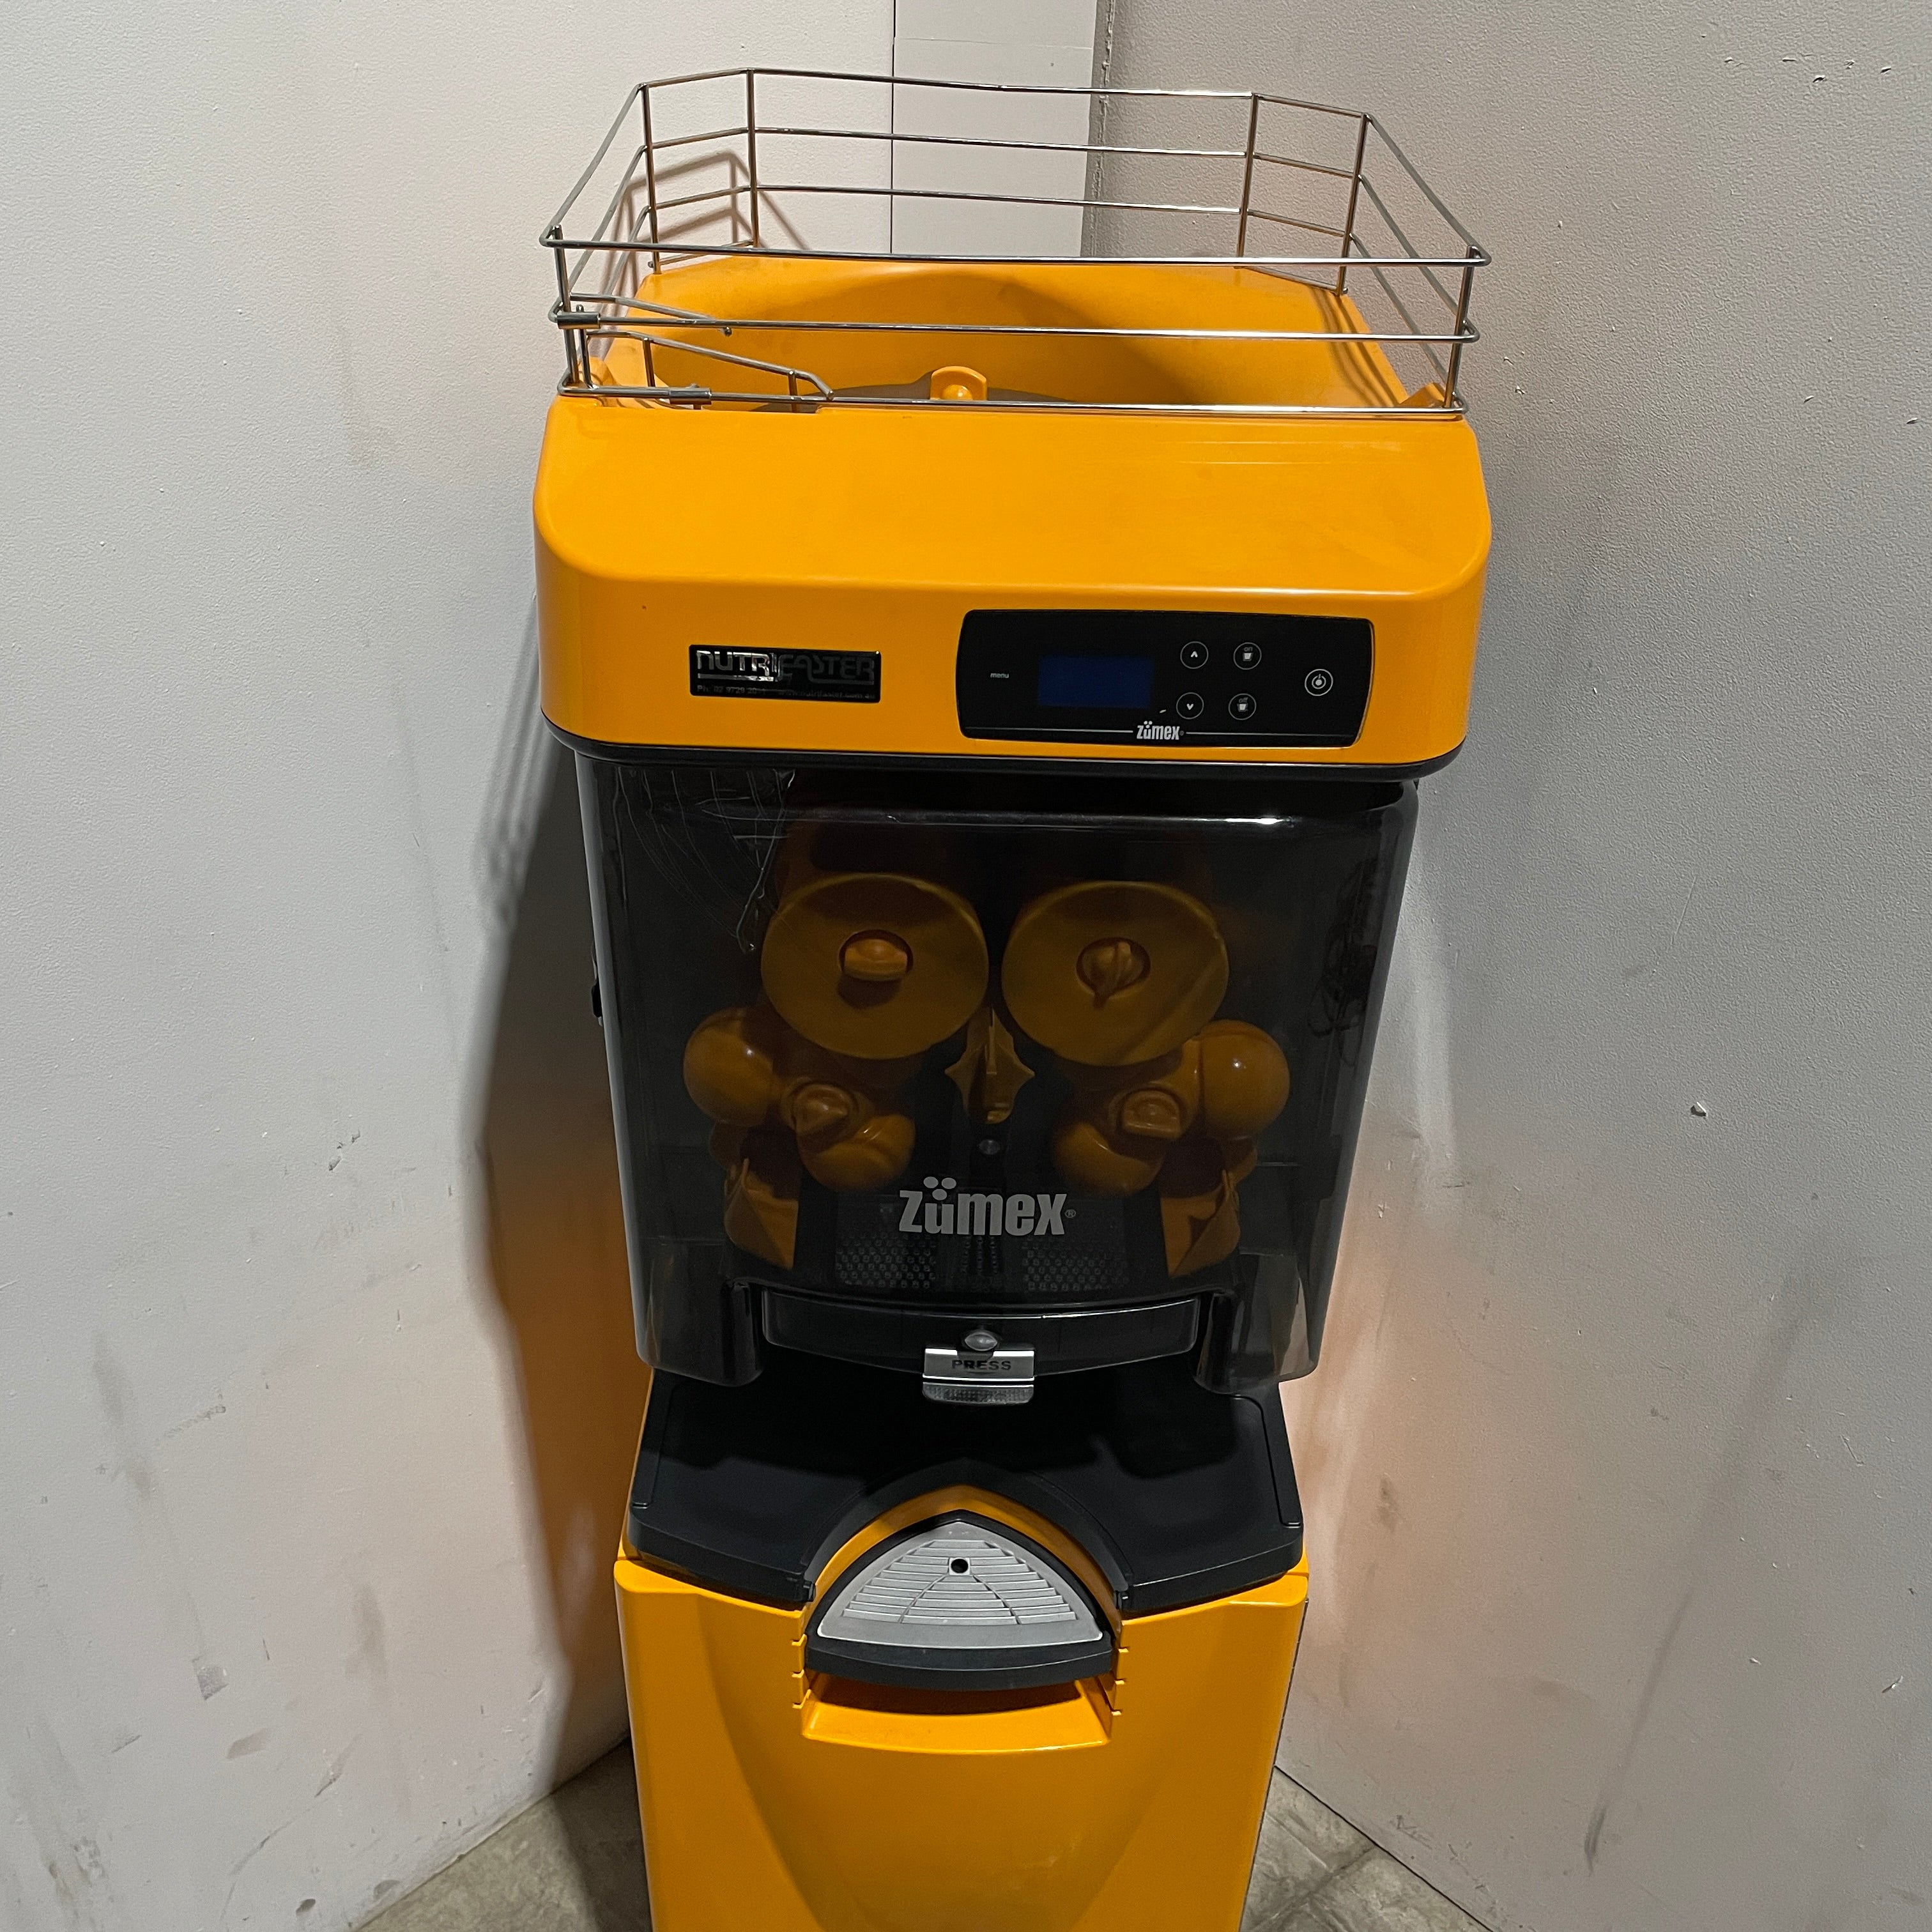 Thumbnail - Zumex Versatile Pro Commercial Orange Juicer